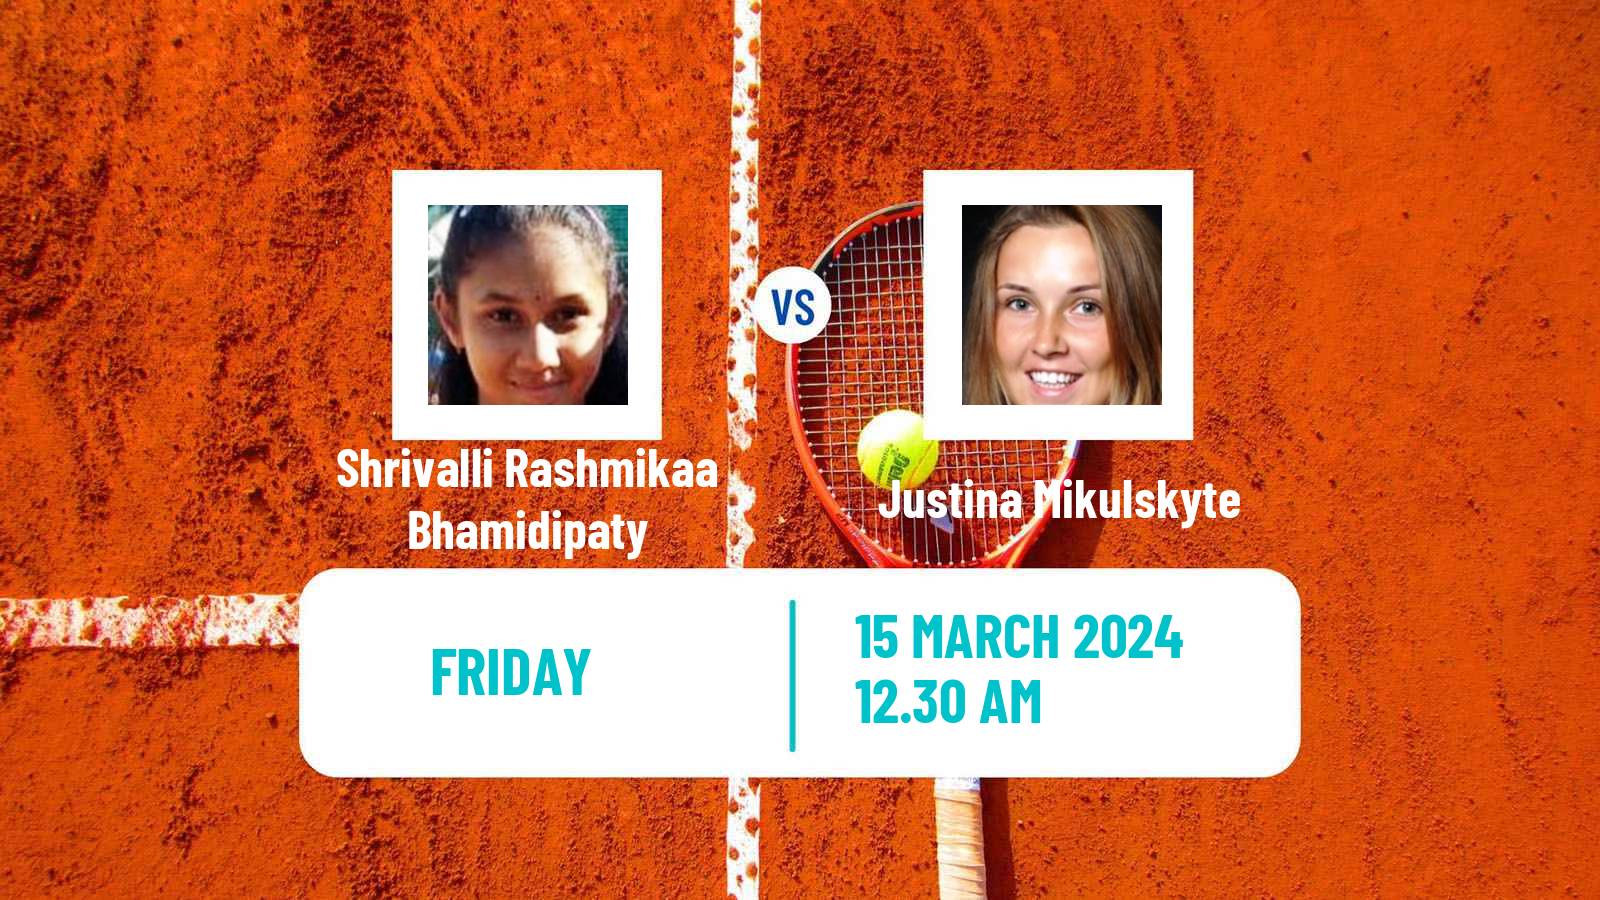 Tennis ITF W35 Indore Women Shrivalli Rashmikaa Bhamidipaty - Justina Mikulskyte